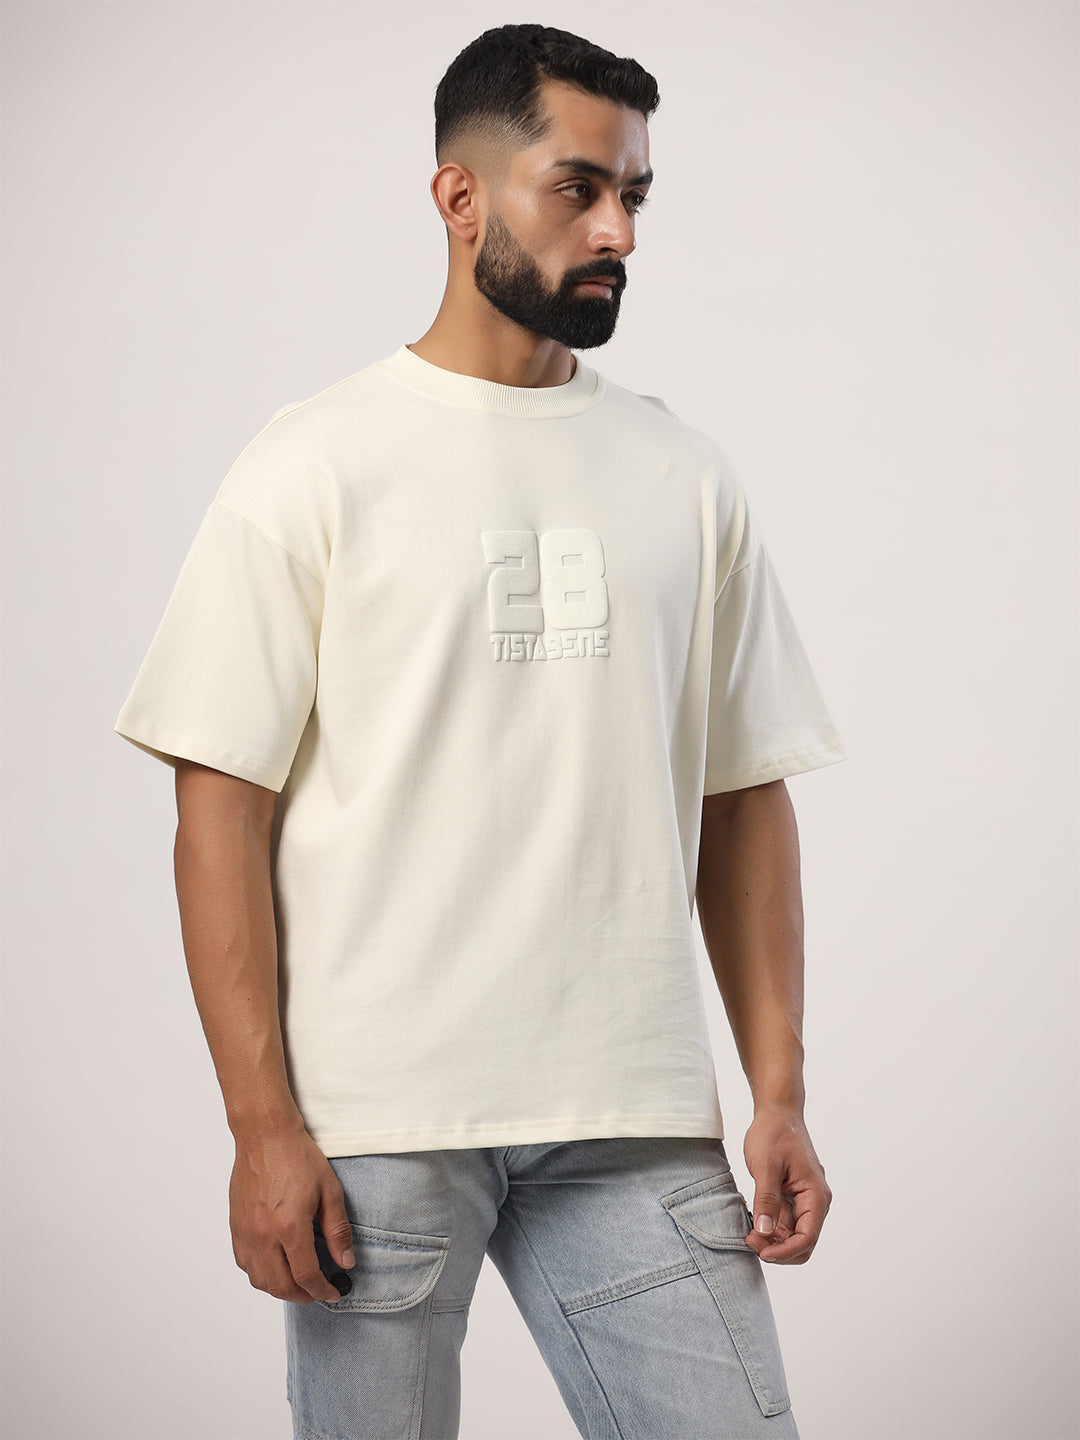 Bura Na Mano Holi Hai - Buy Holi T-Shirts Online – DeshiDukan Tshirt Lounge